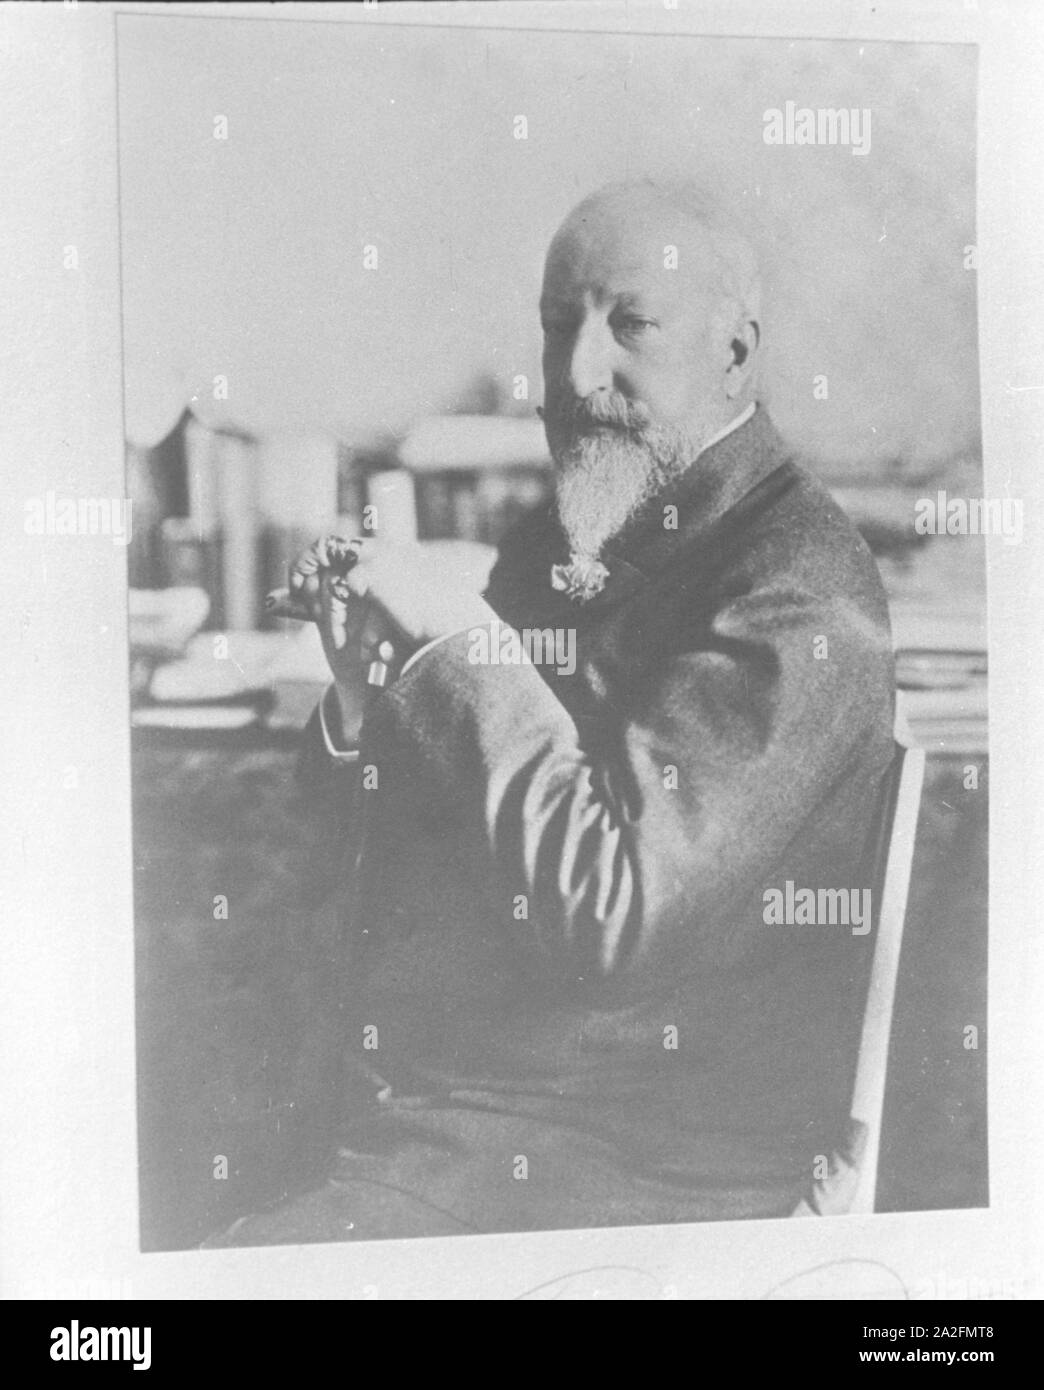 Reproduktionen alter Bilder und Fotografien, Deutschland 1930er Jahre. Riproduzioni di vecchie foto e fotografie, Germania 1930s. Foto Stock